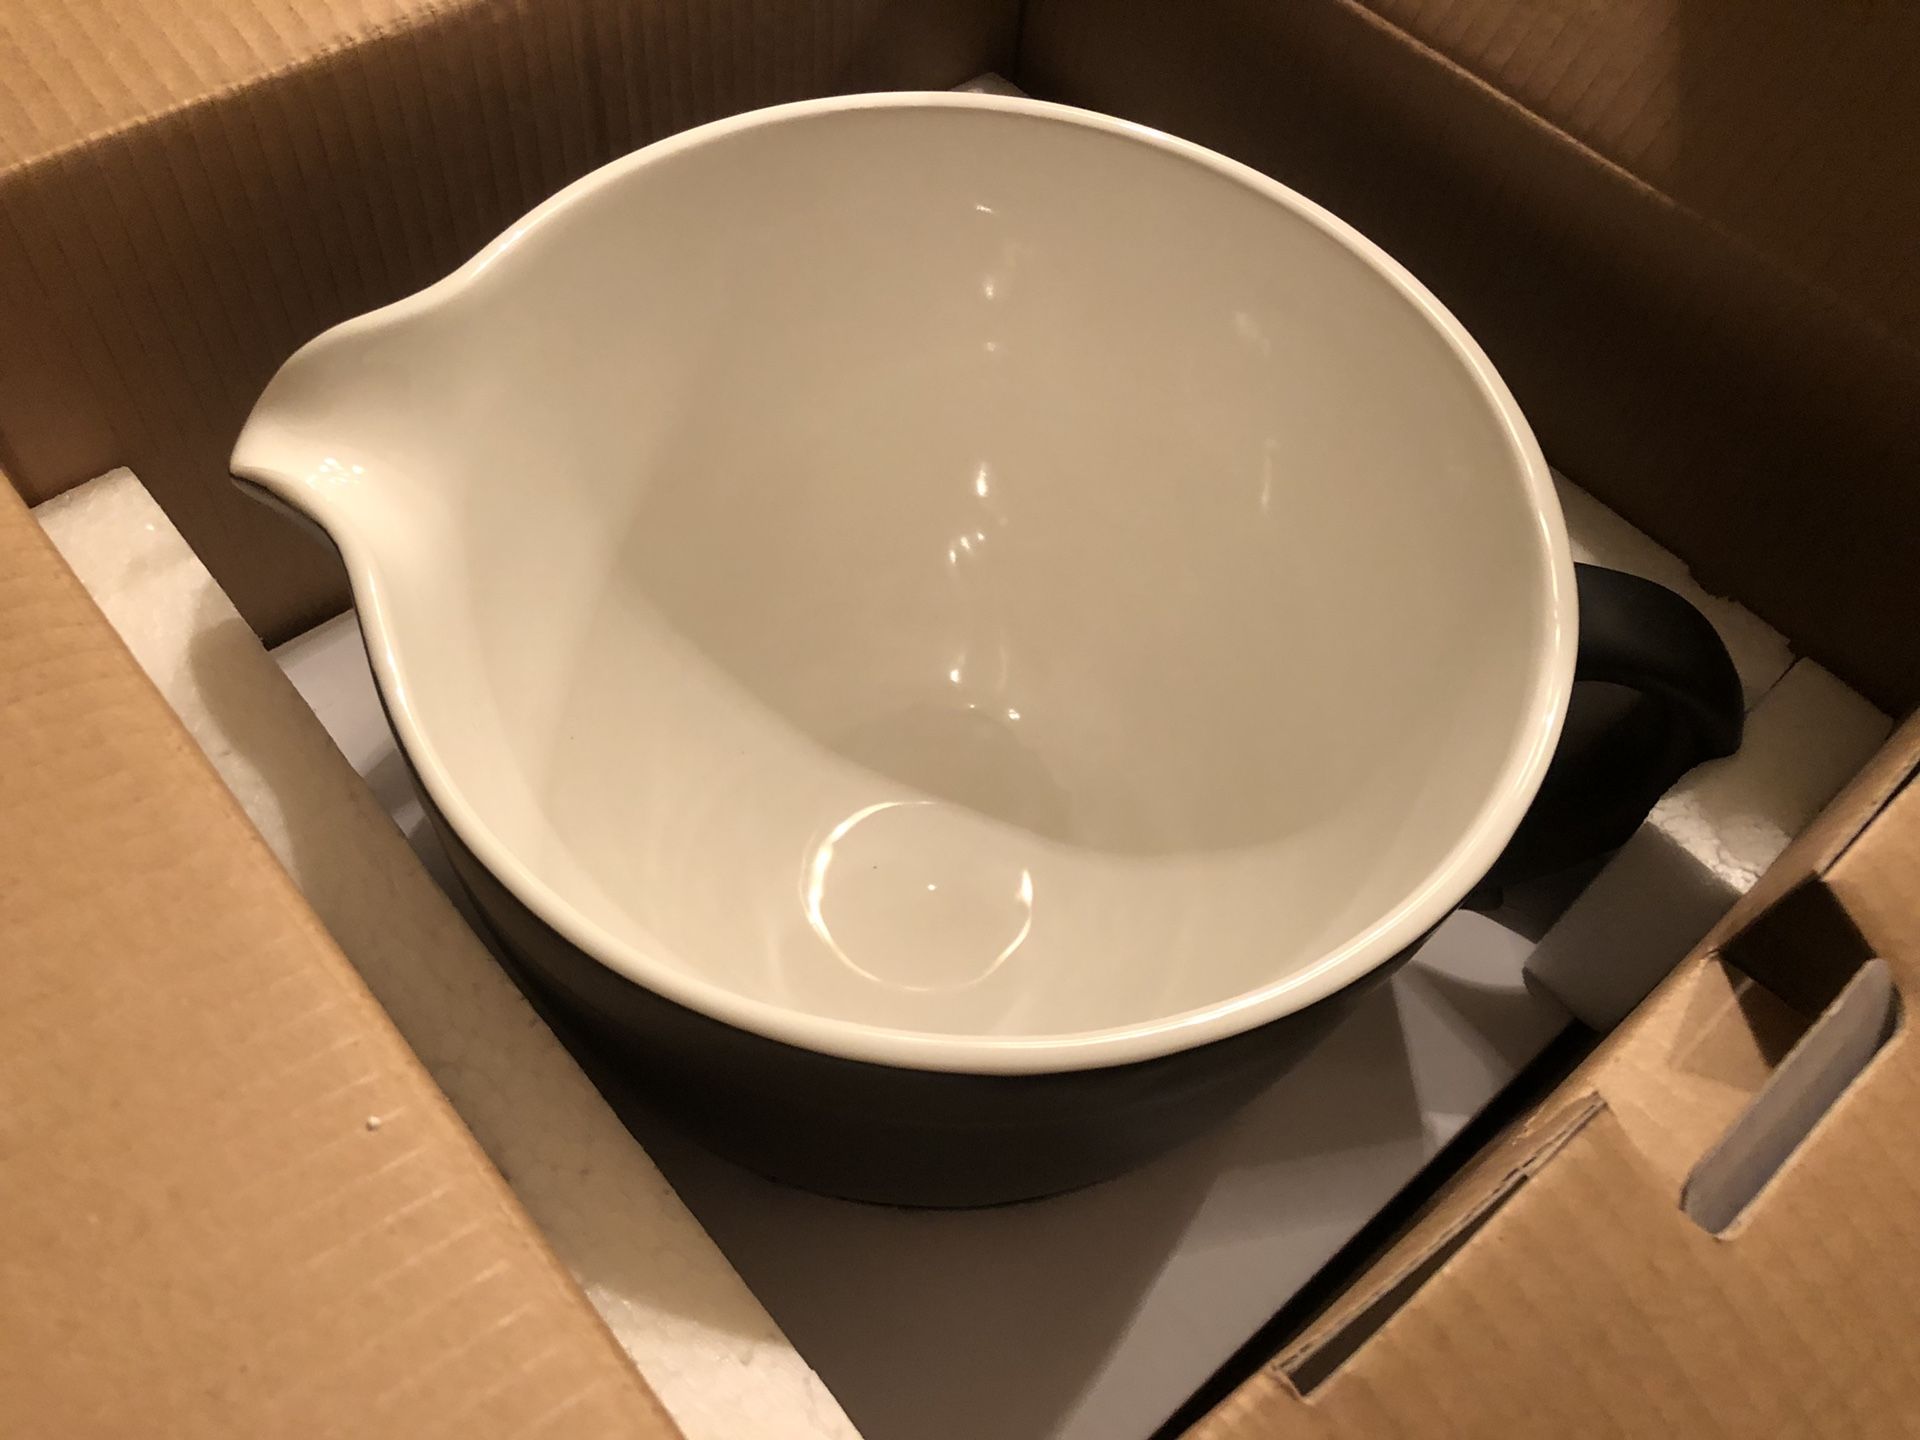 KitchenAid Aqua Kitchen Utensil Bowl Set for Sale in Gardena, CA - OfferUp